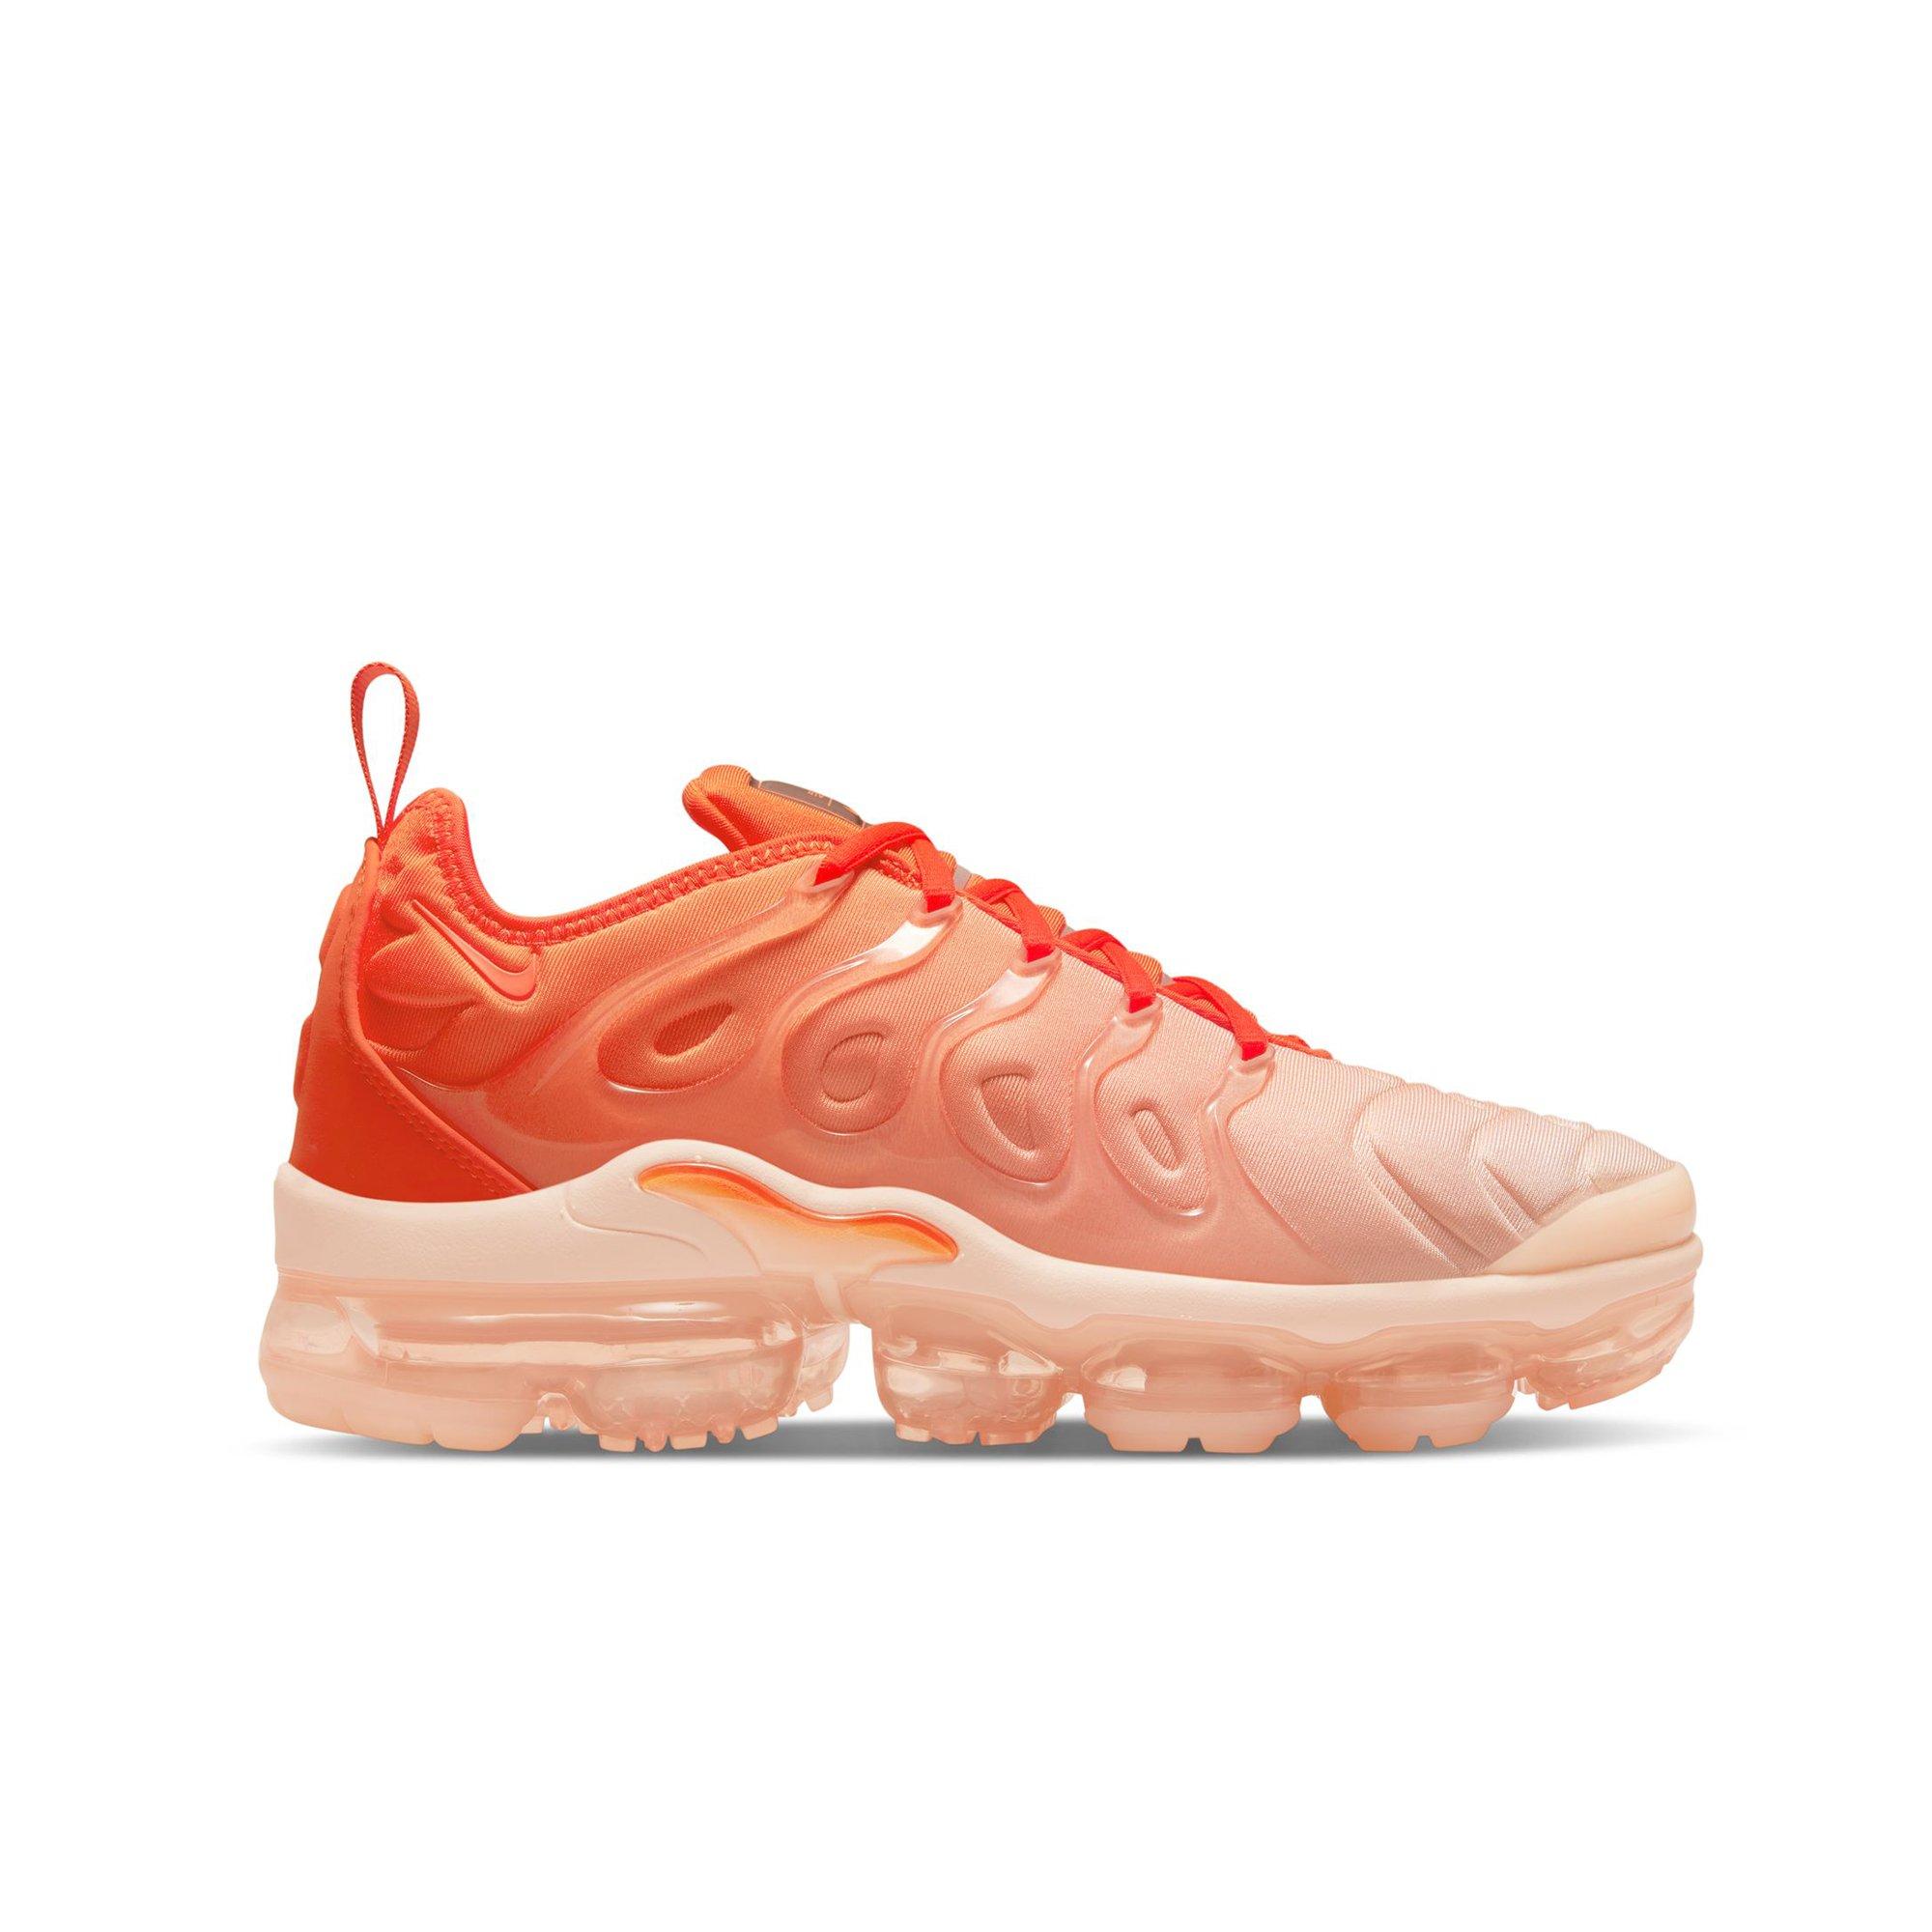 Nike VaporMax Plus "Guava Orange" Women's Shoe